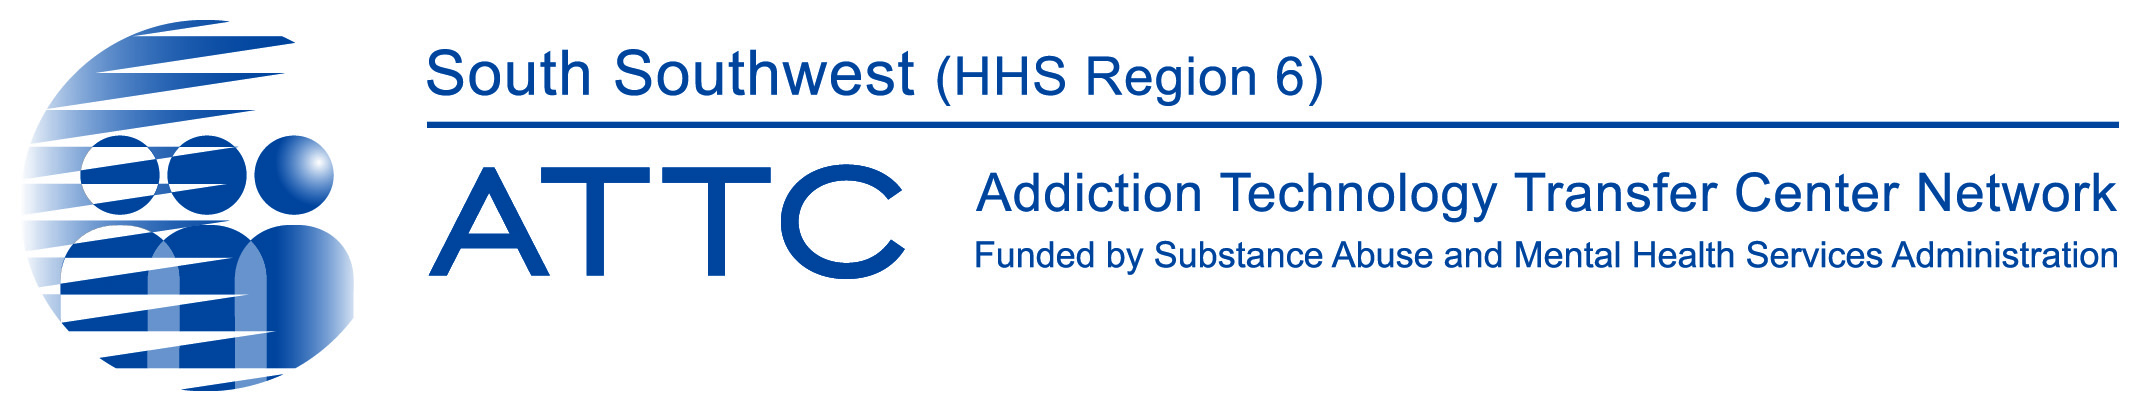 South Southwest (HHS Region )  ATTC Addiction Technology Transfer Center Network